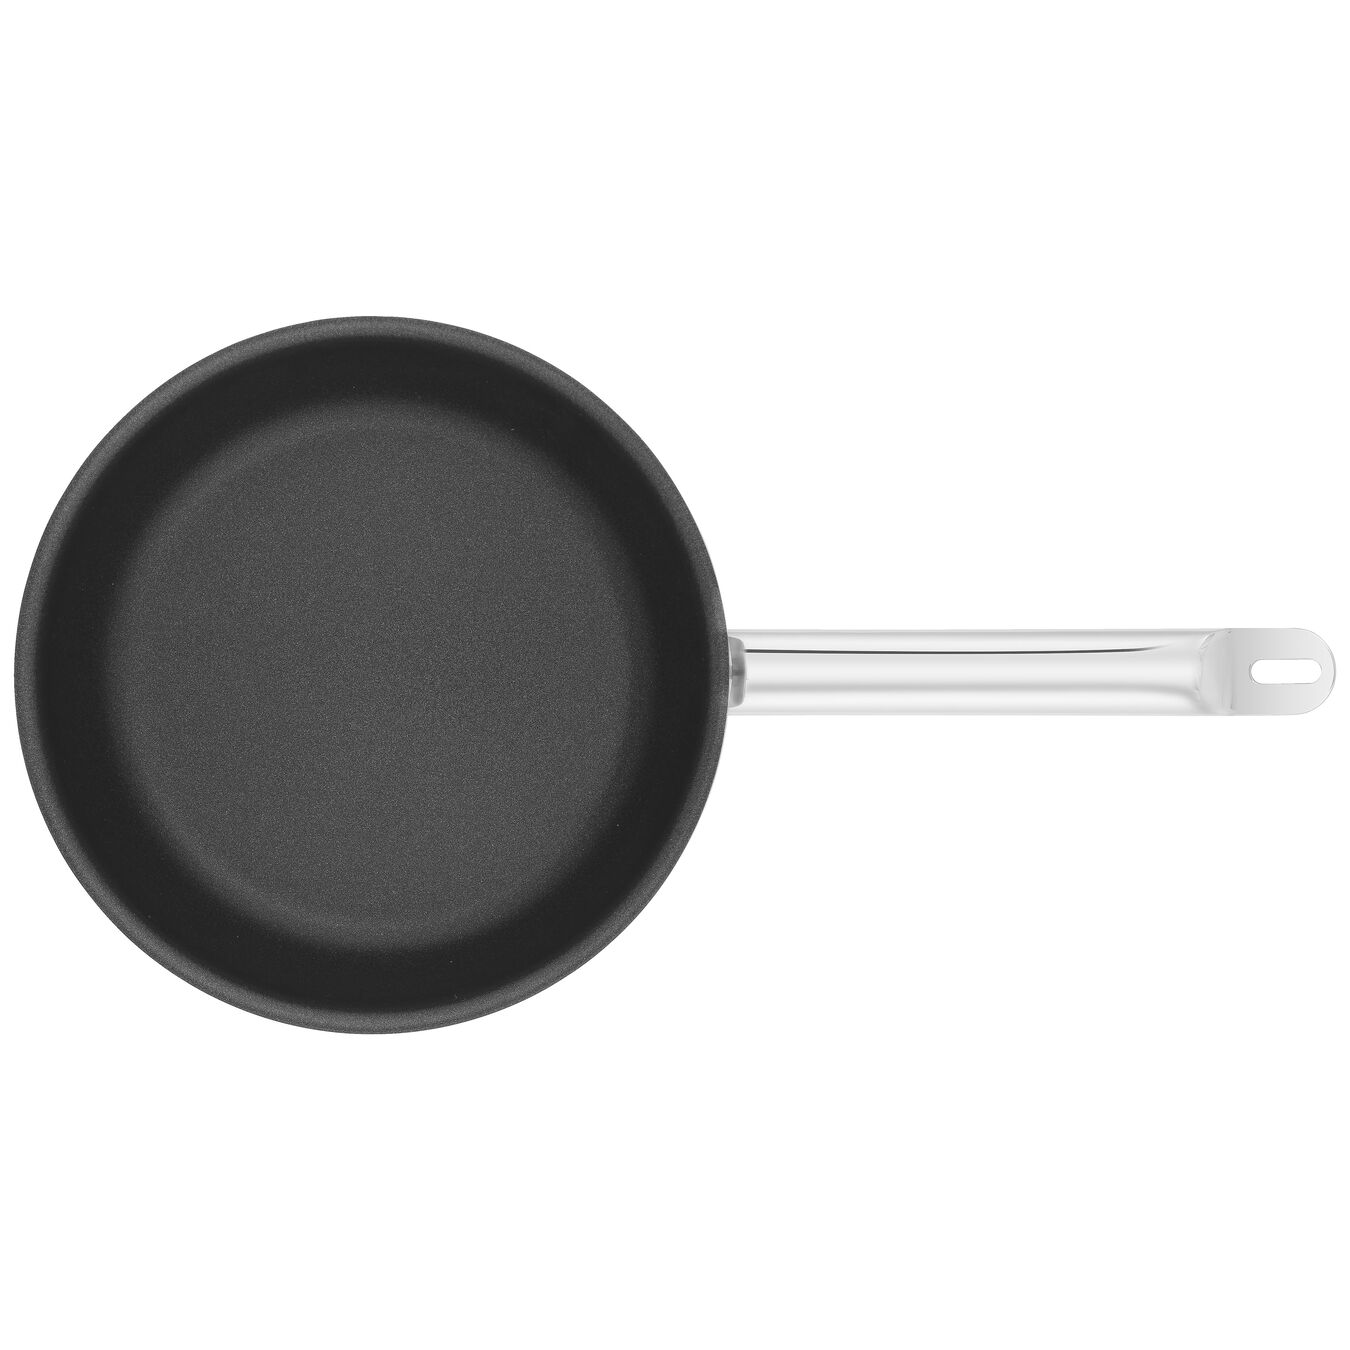 20 cm 18/10 Stainless Steel Frying pan silver-black,,large 4